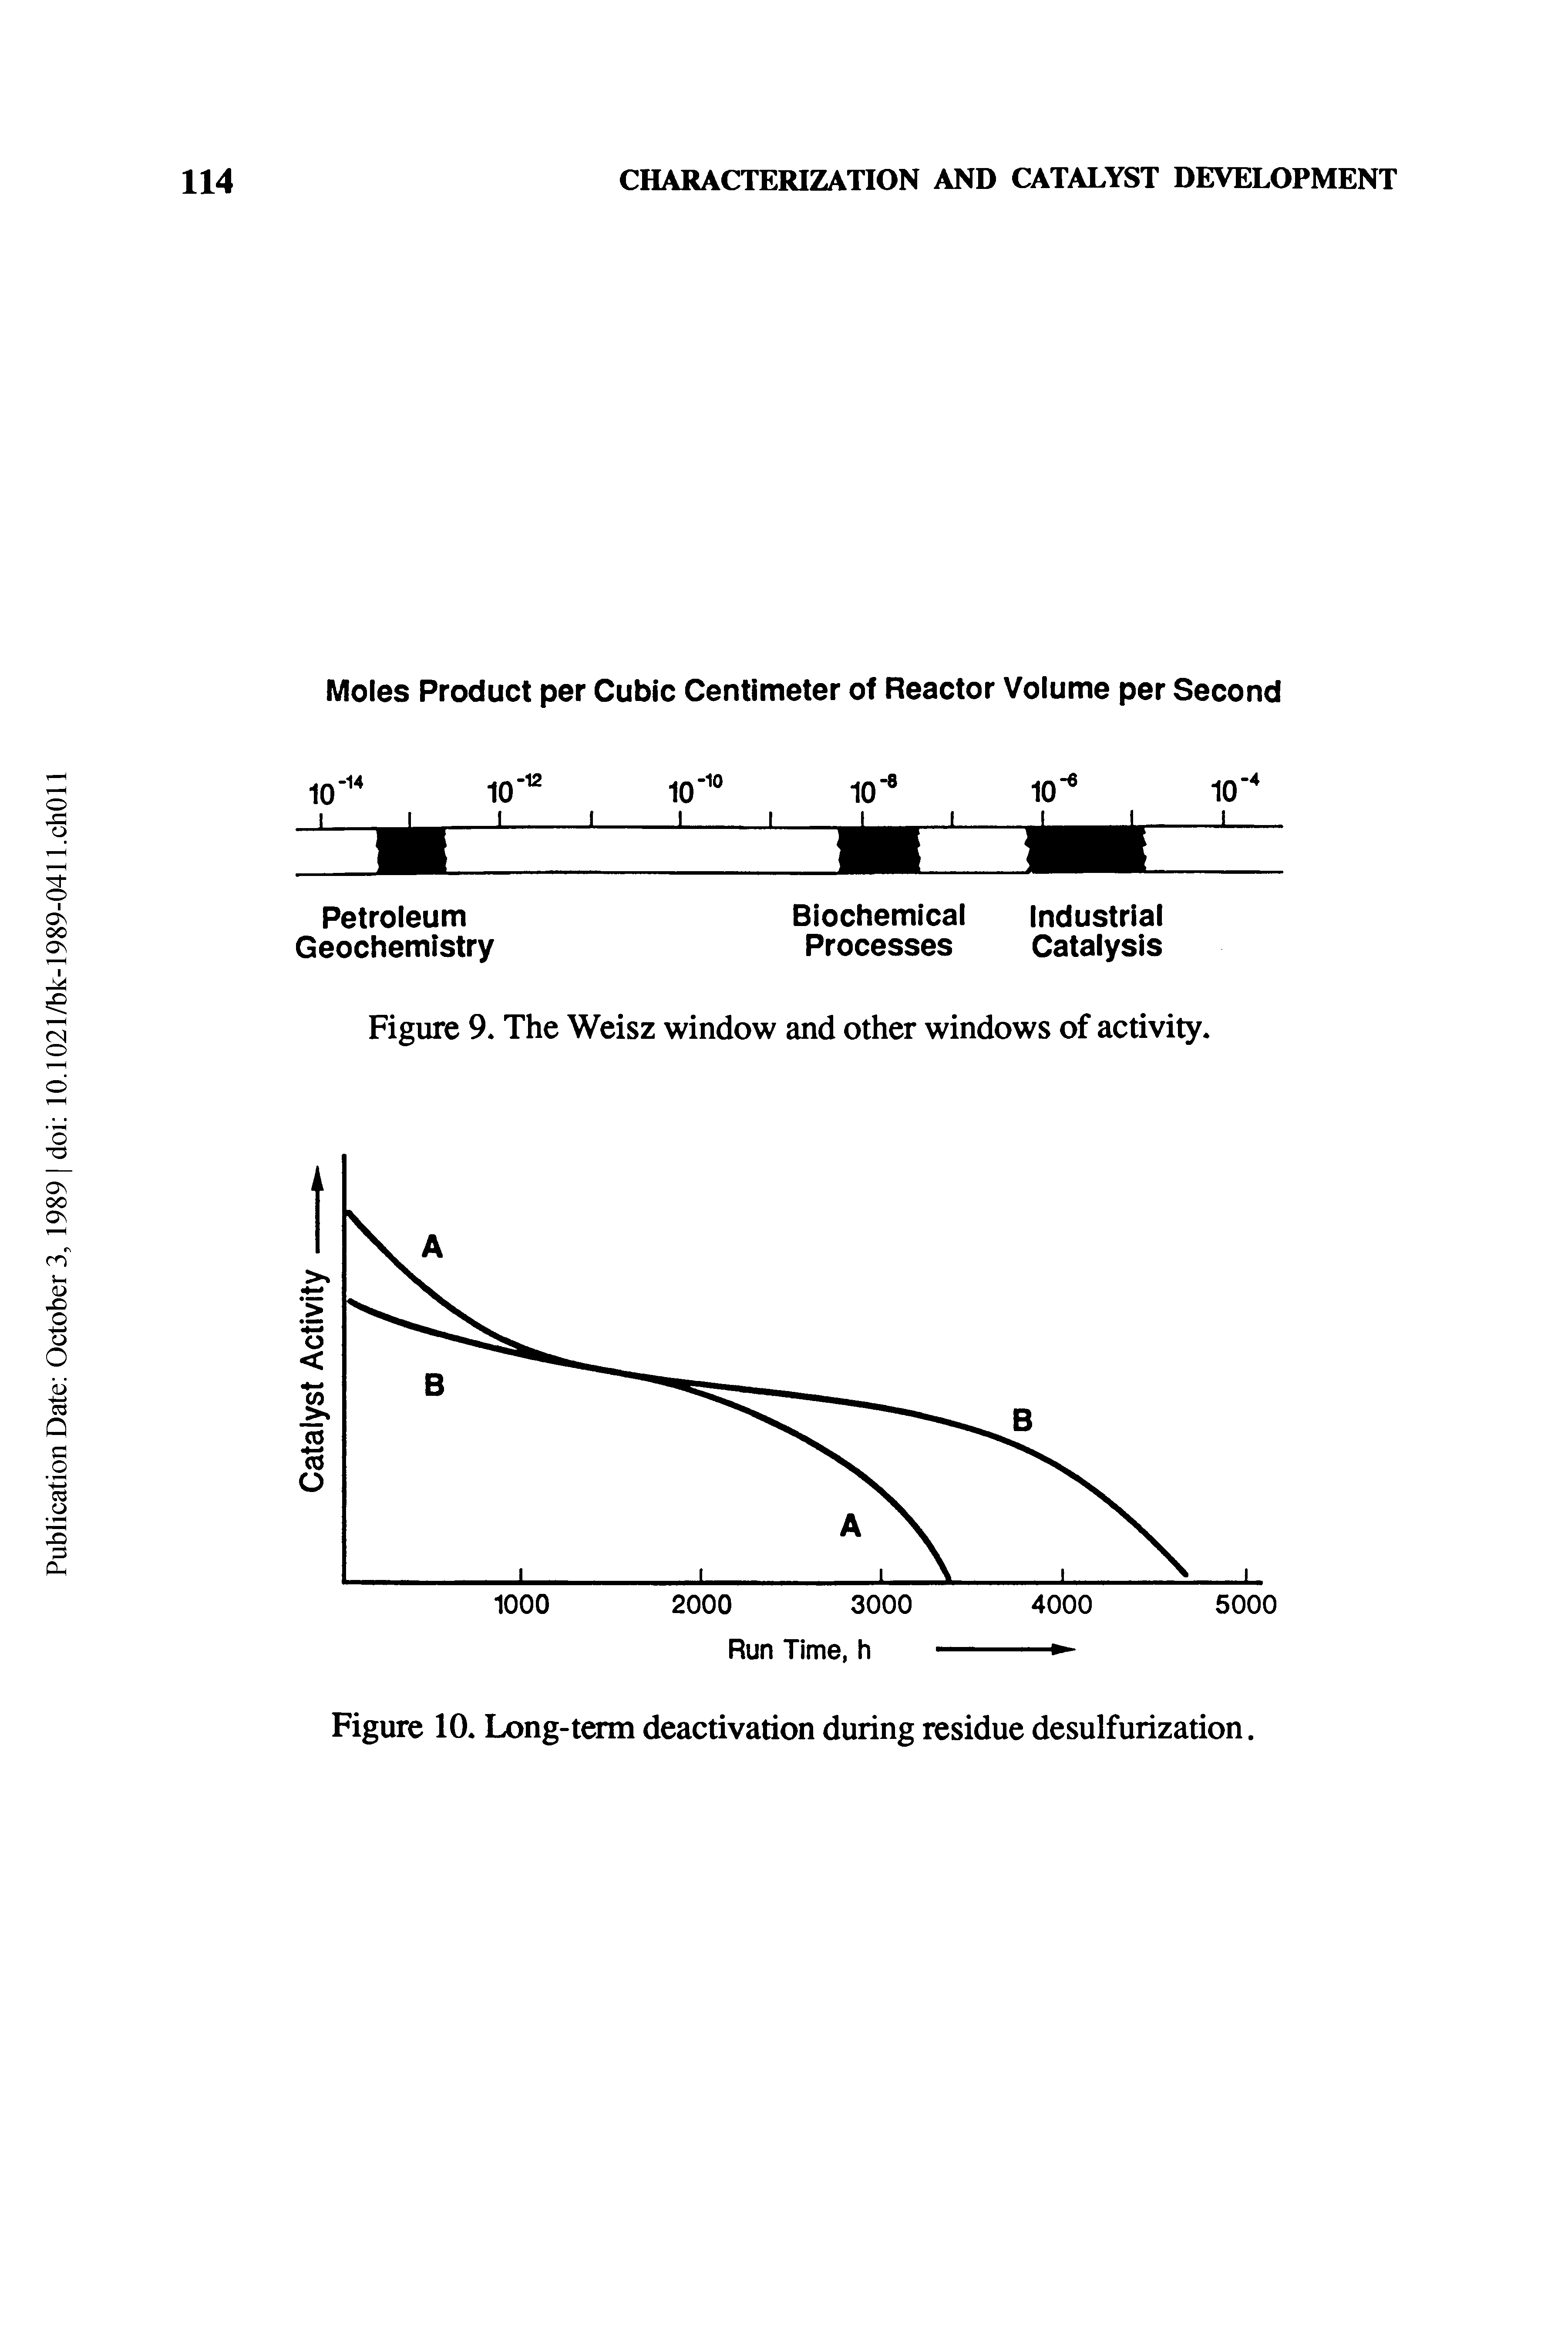 Figure 10. Long-term deactivation during residue desulfurization.